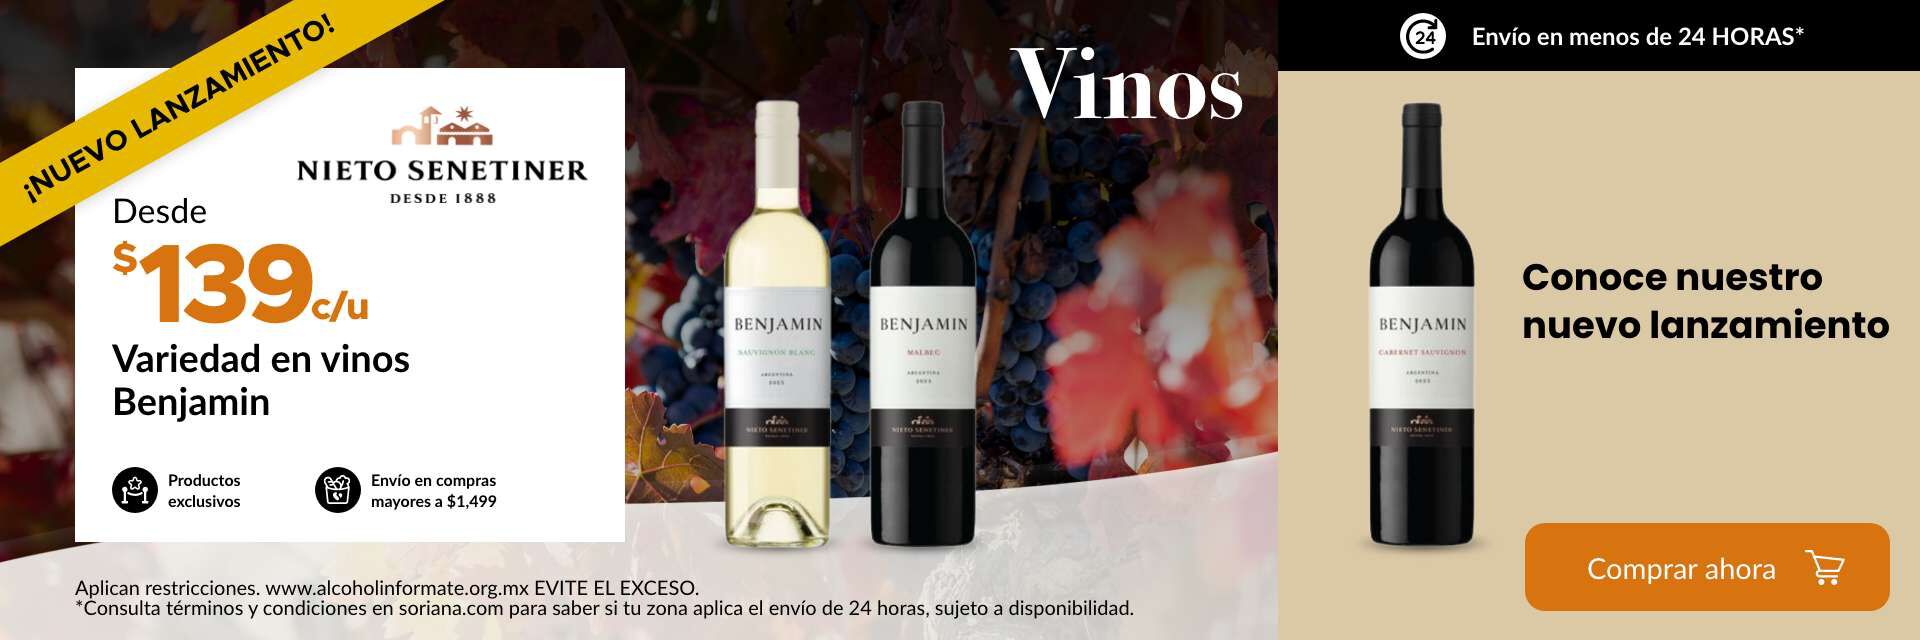 Banner promocional vinos benjamin